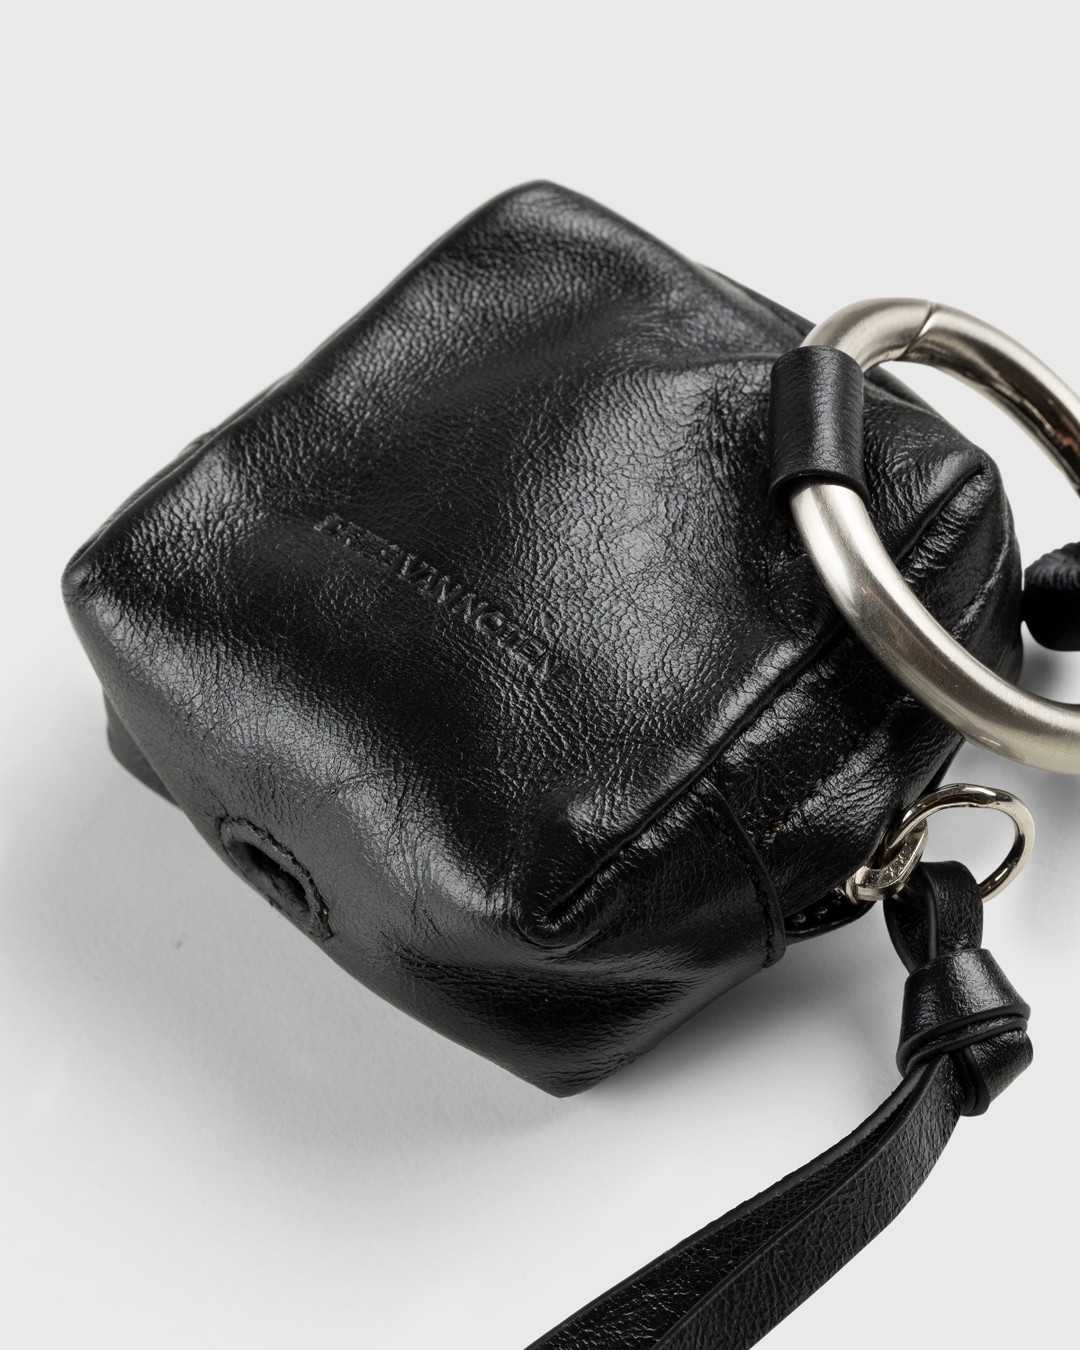 Dries van Noten – Leather AirPods Case Black - Air Pod Cases - Black - Image 2